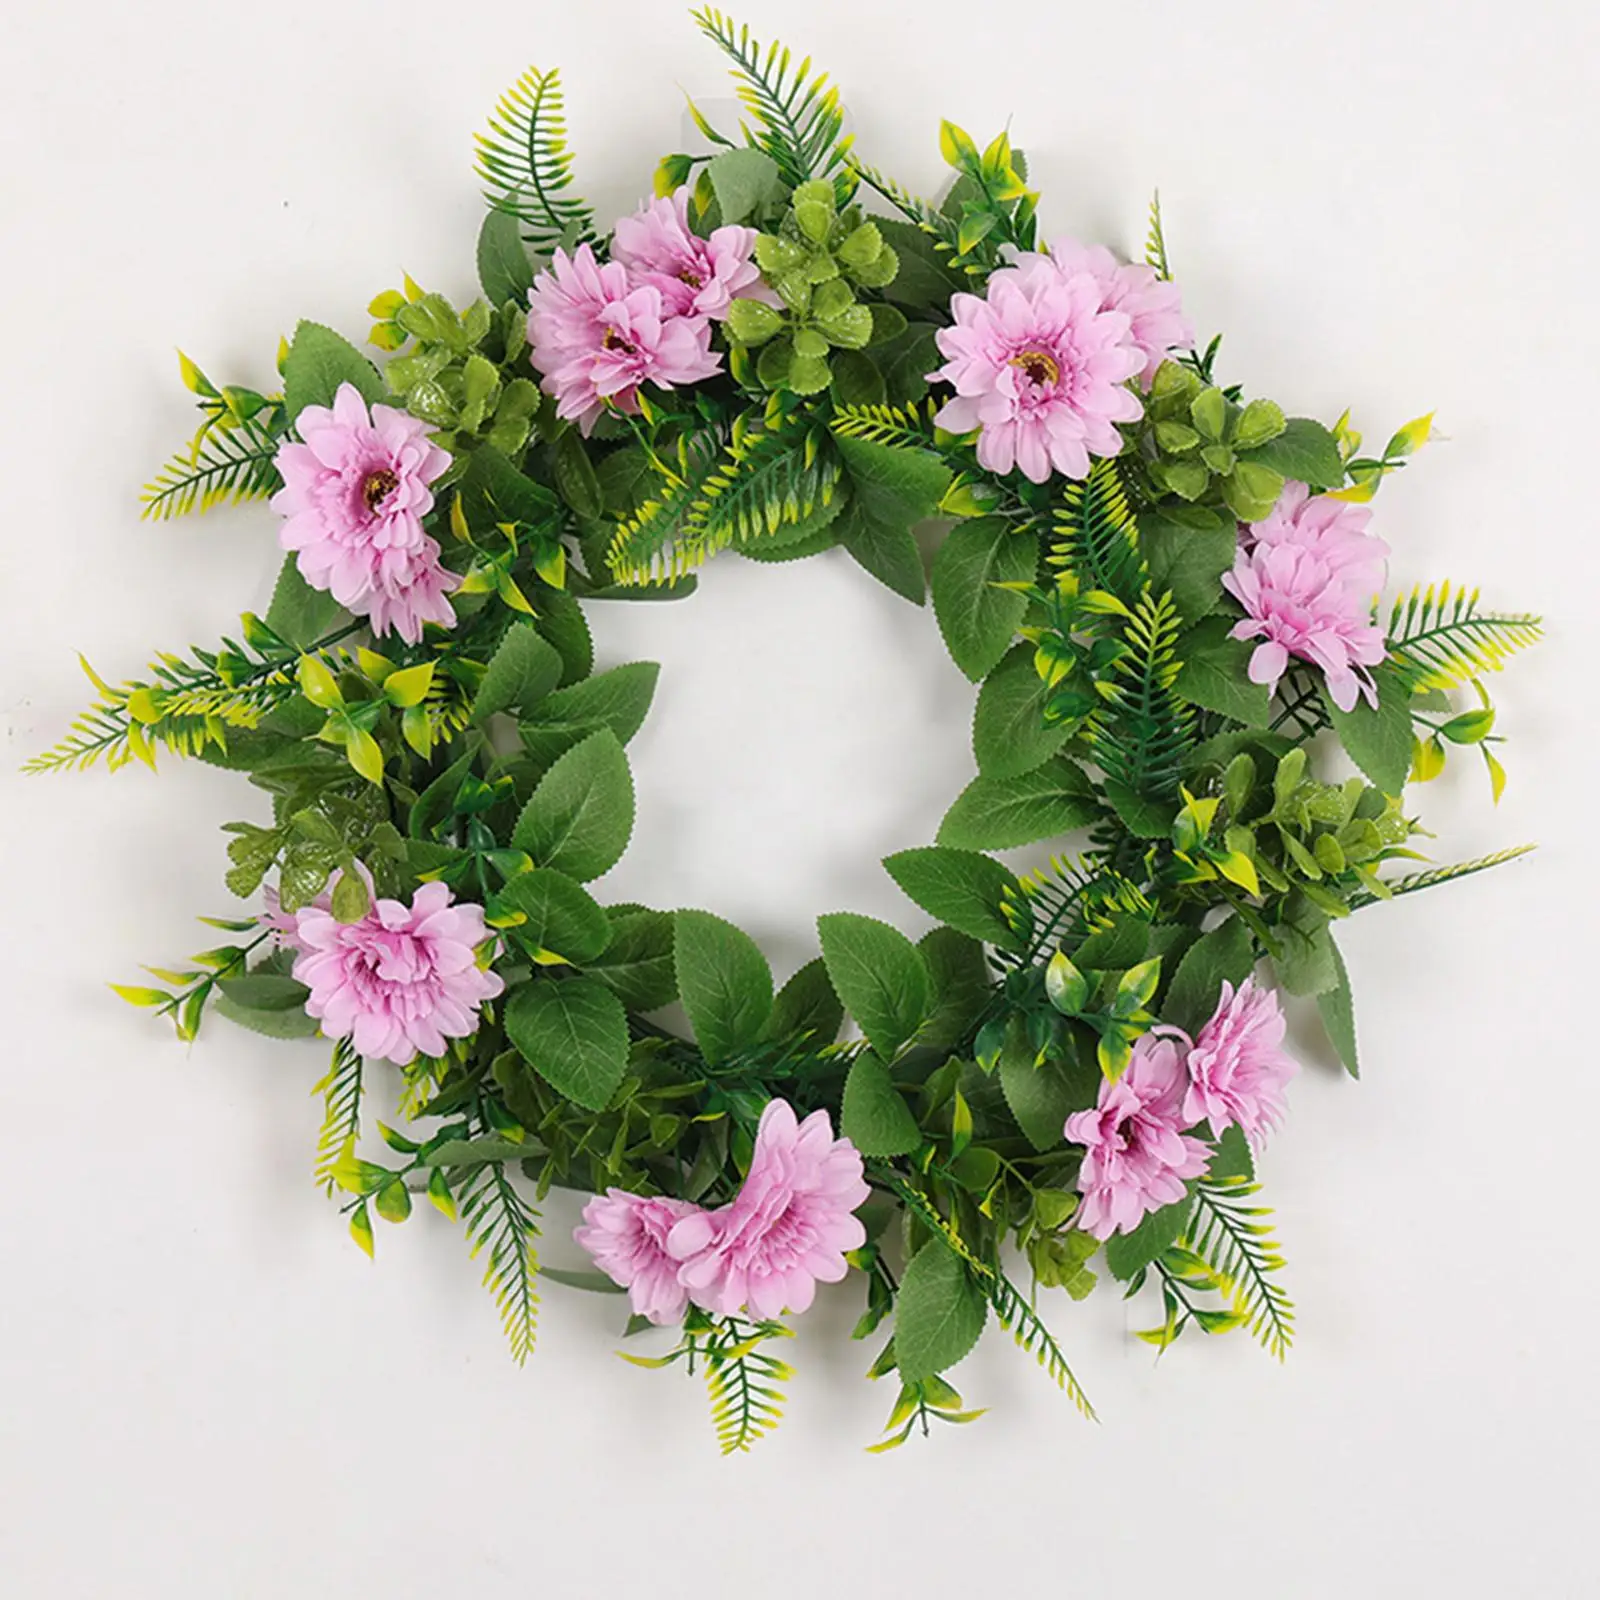 Artificial Vivid Door Wreath Silk Flower Garland Simulation Flowers Ornaments for Xmas Home Decor Front Door Wedding Gift